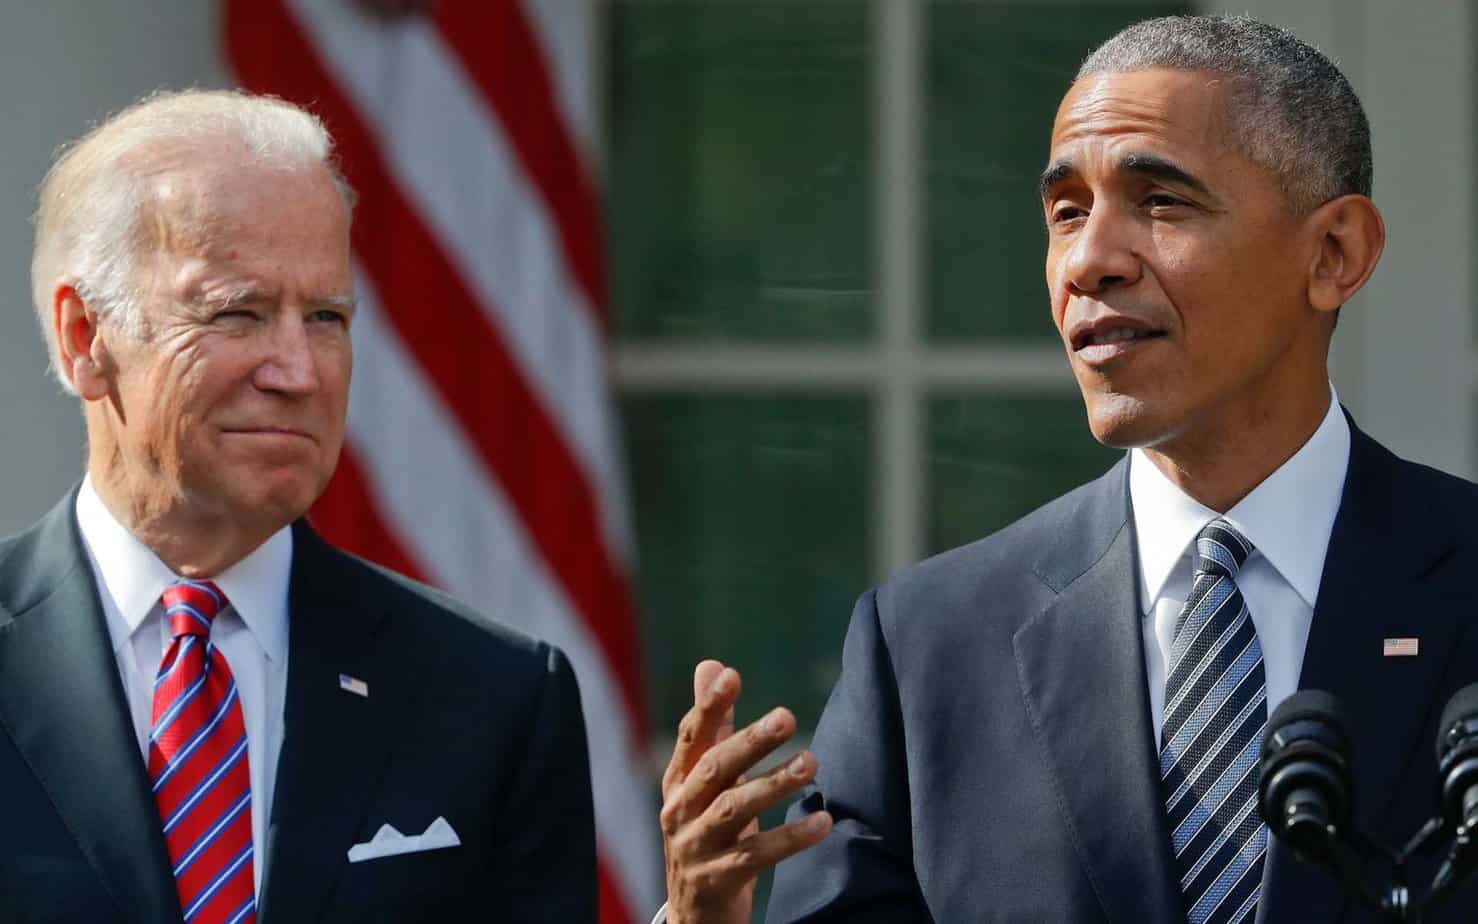 Obama to Endorse Biden - Video confirms several leaks